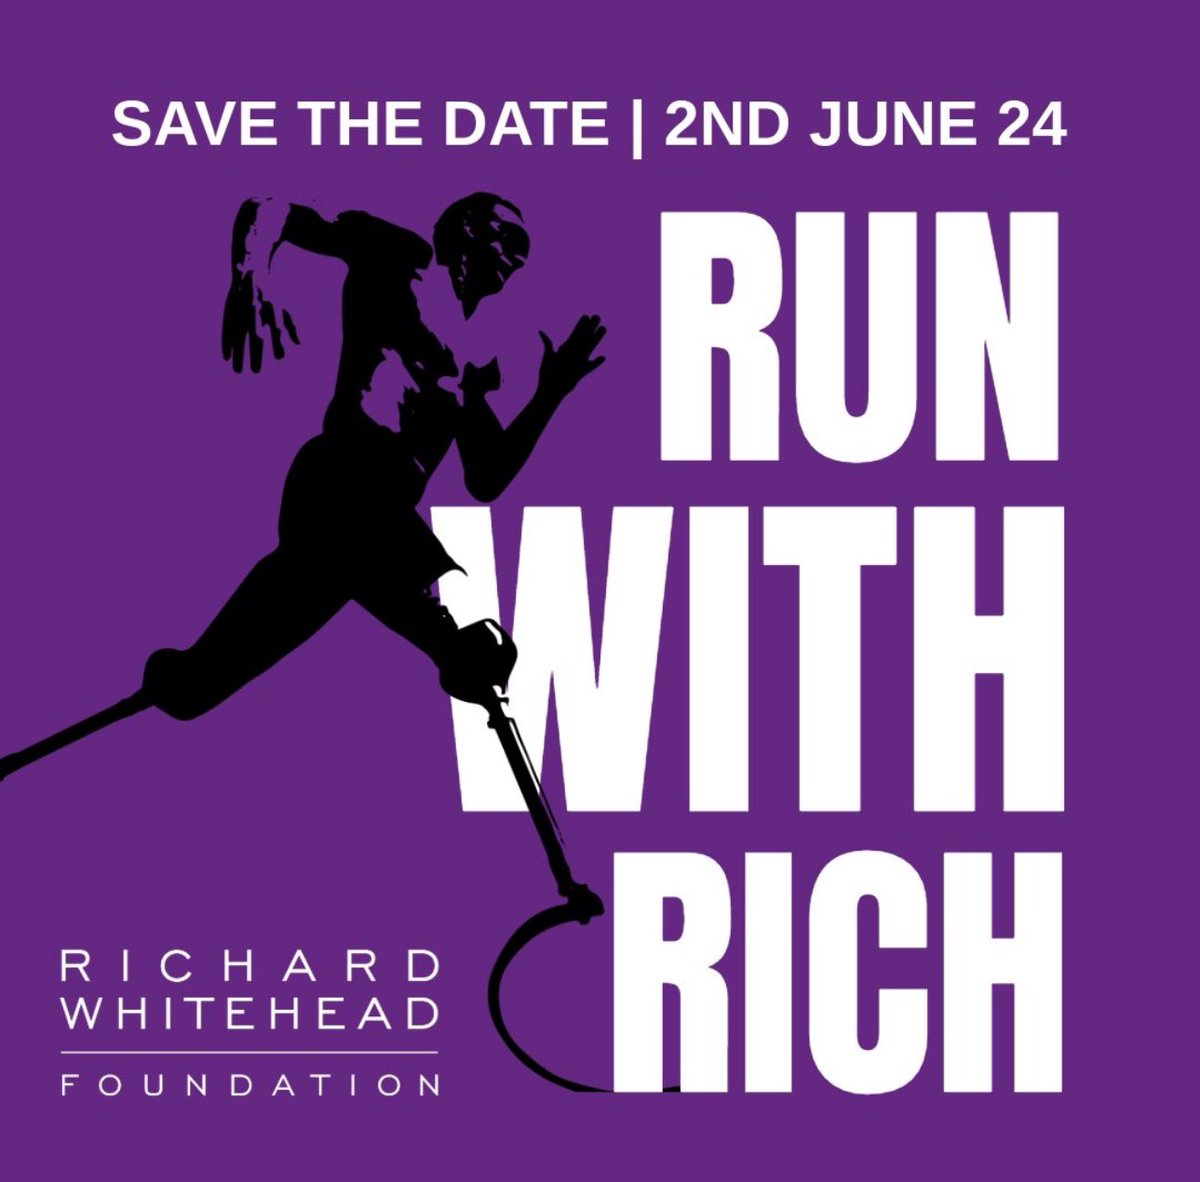 Who’s coming!!! Run/Walk your way!! Rich 🏃🏾🏃🏻‍♂️🏃🏻‍♀️👩🏾‍🦼👩🏽‍🦯🫶🏻x richardwhitehead.enthuse.com/cf/run-with-ri…